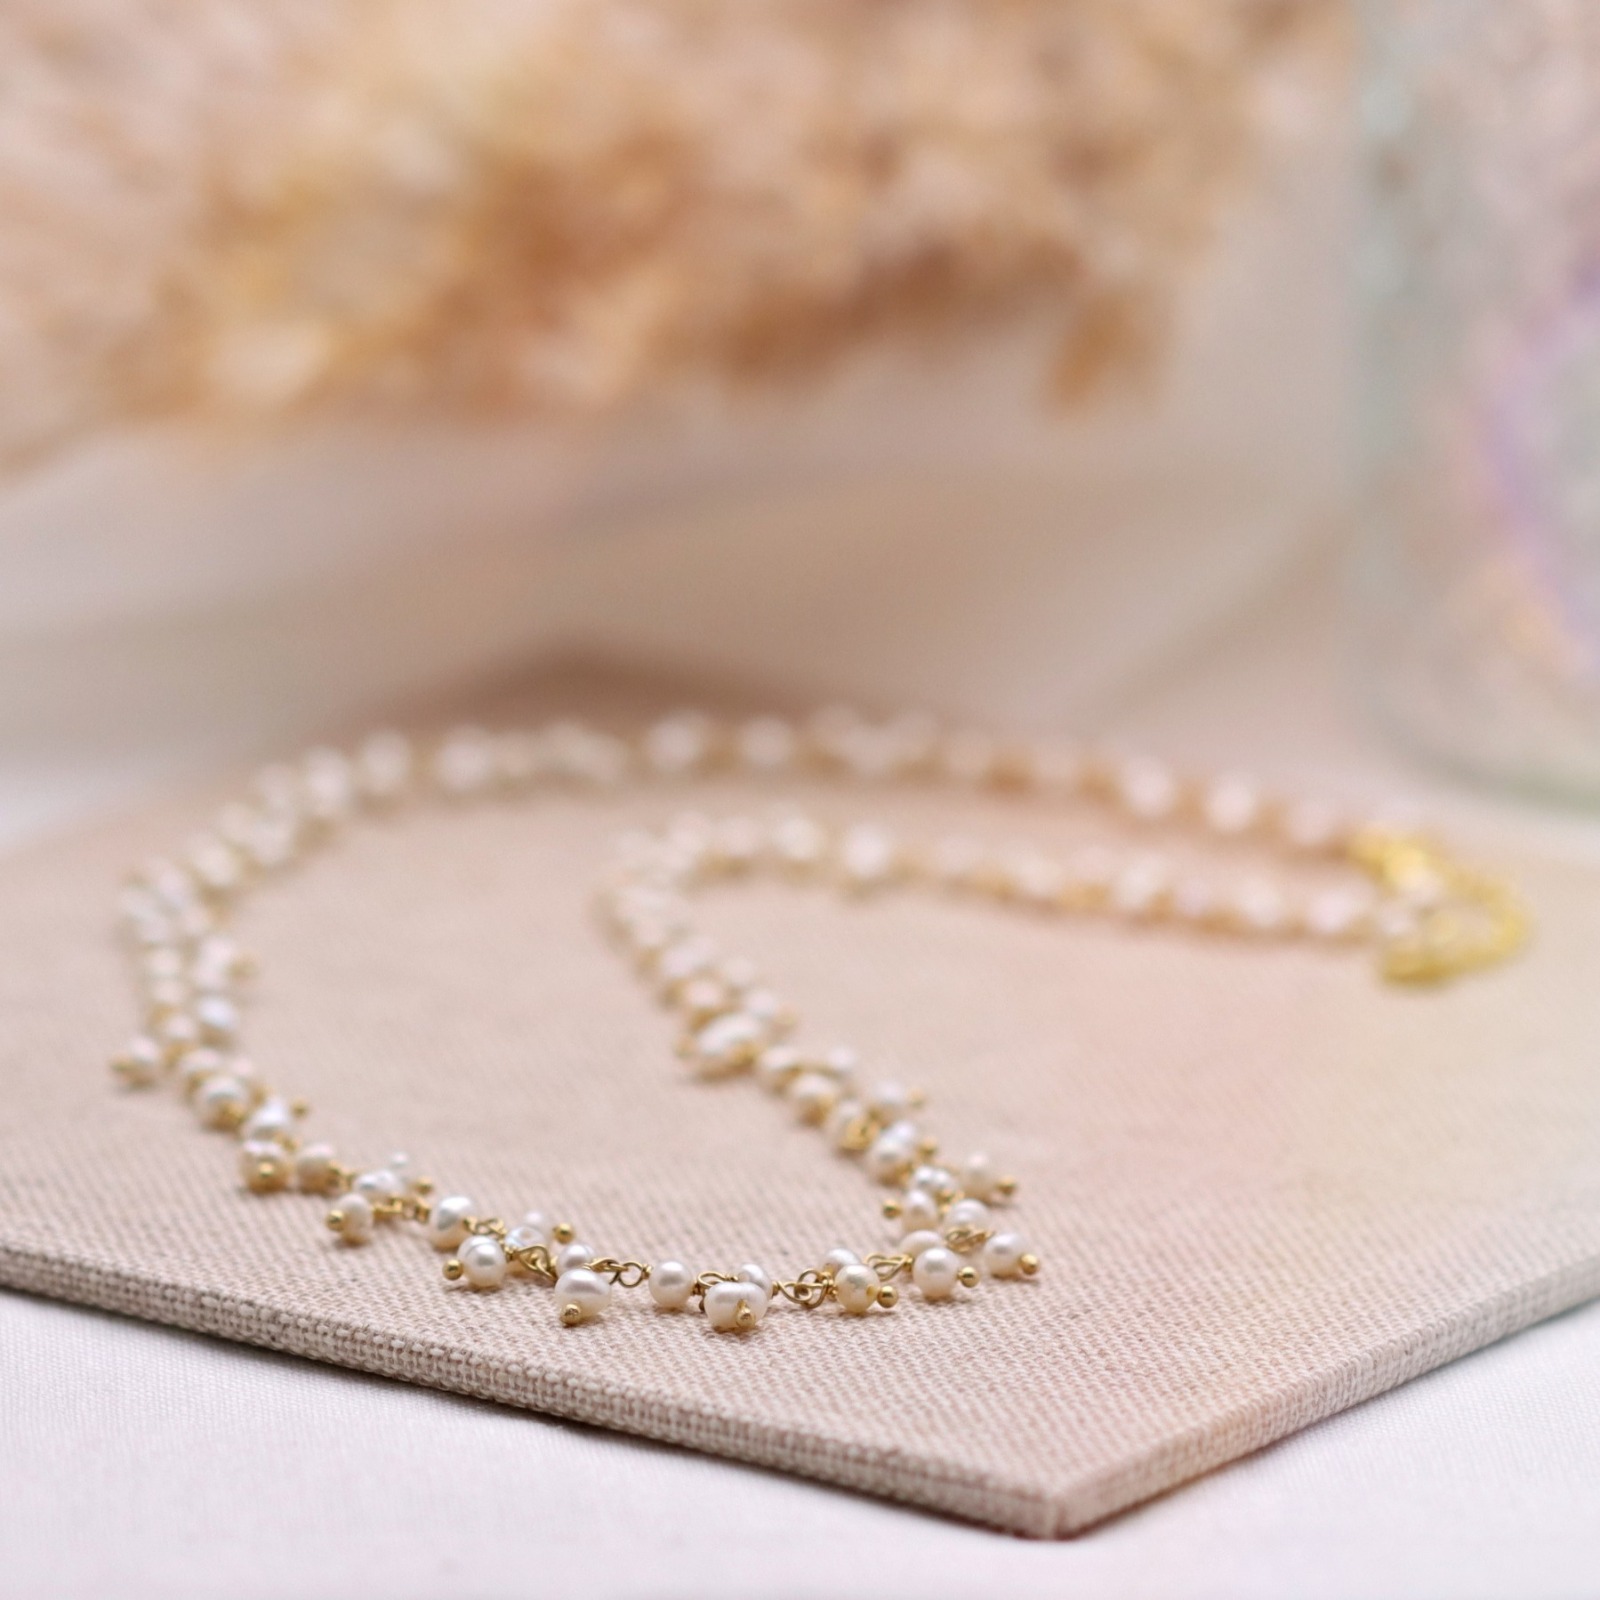 Goldene Kette aus echten Perlen, 925er Silber vergoldet 3